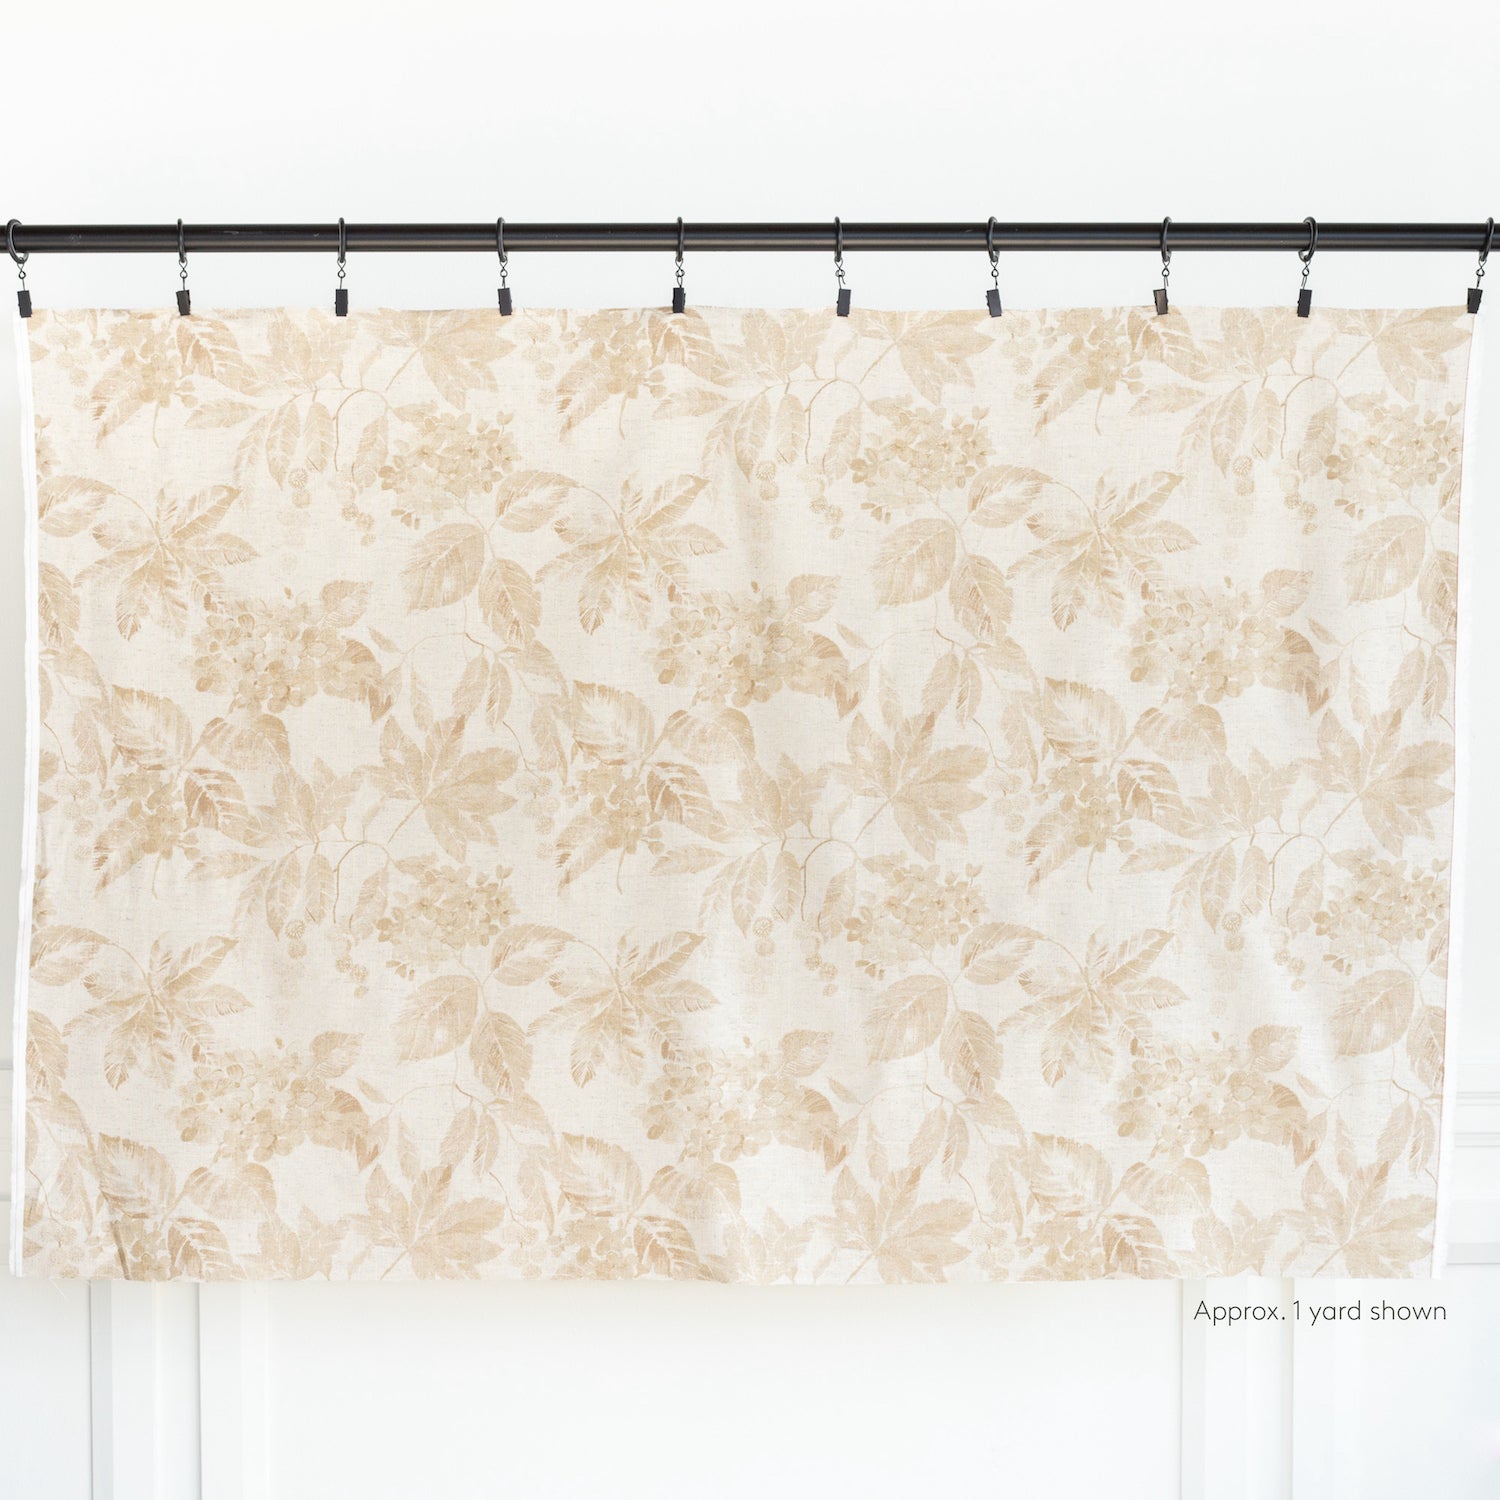 a tonal oatmeal cream and soft ochre brown floral print fabric : one yard